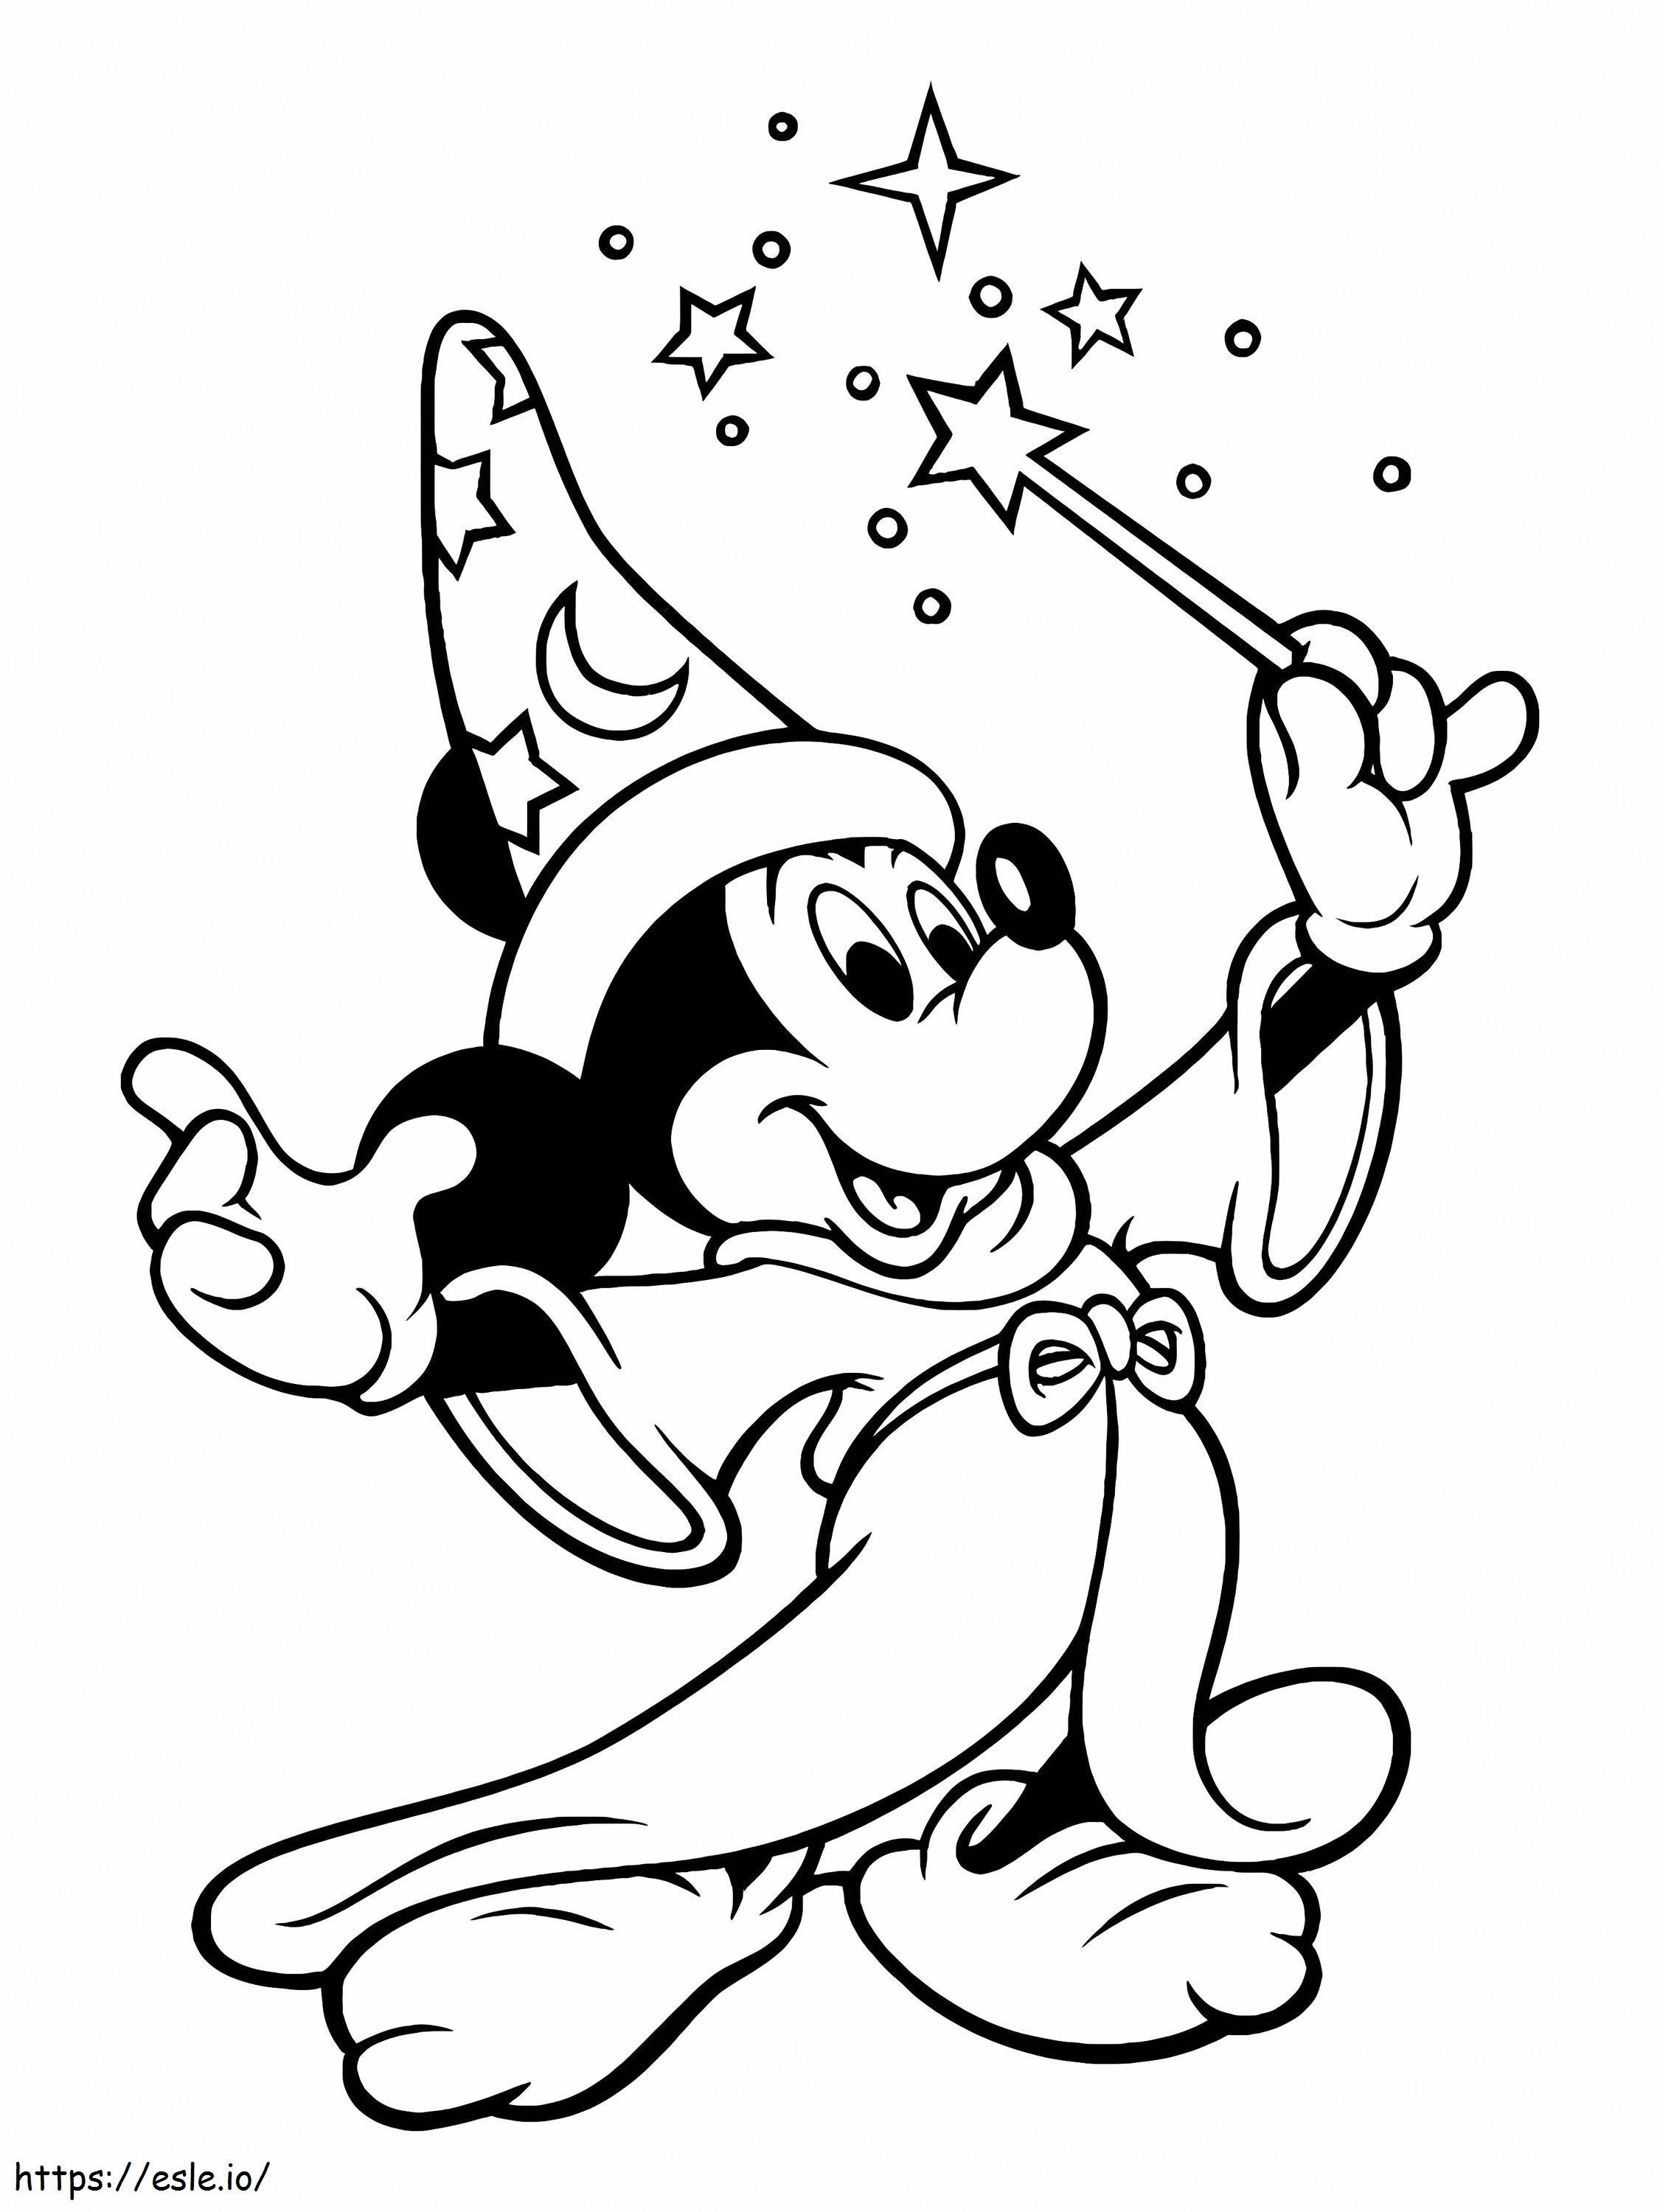 Mickey Mouse aus Fantasia ausmalbilder